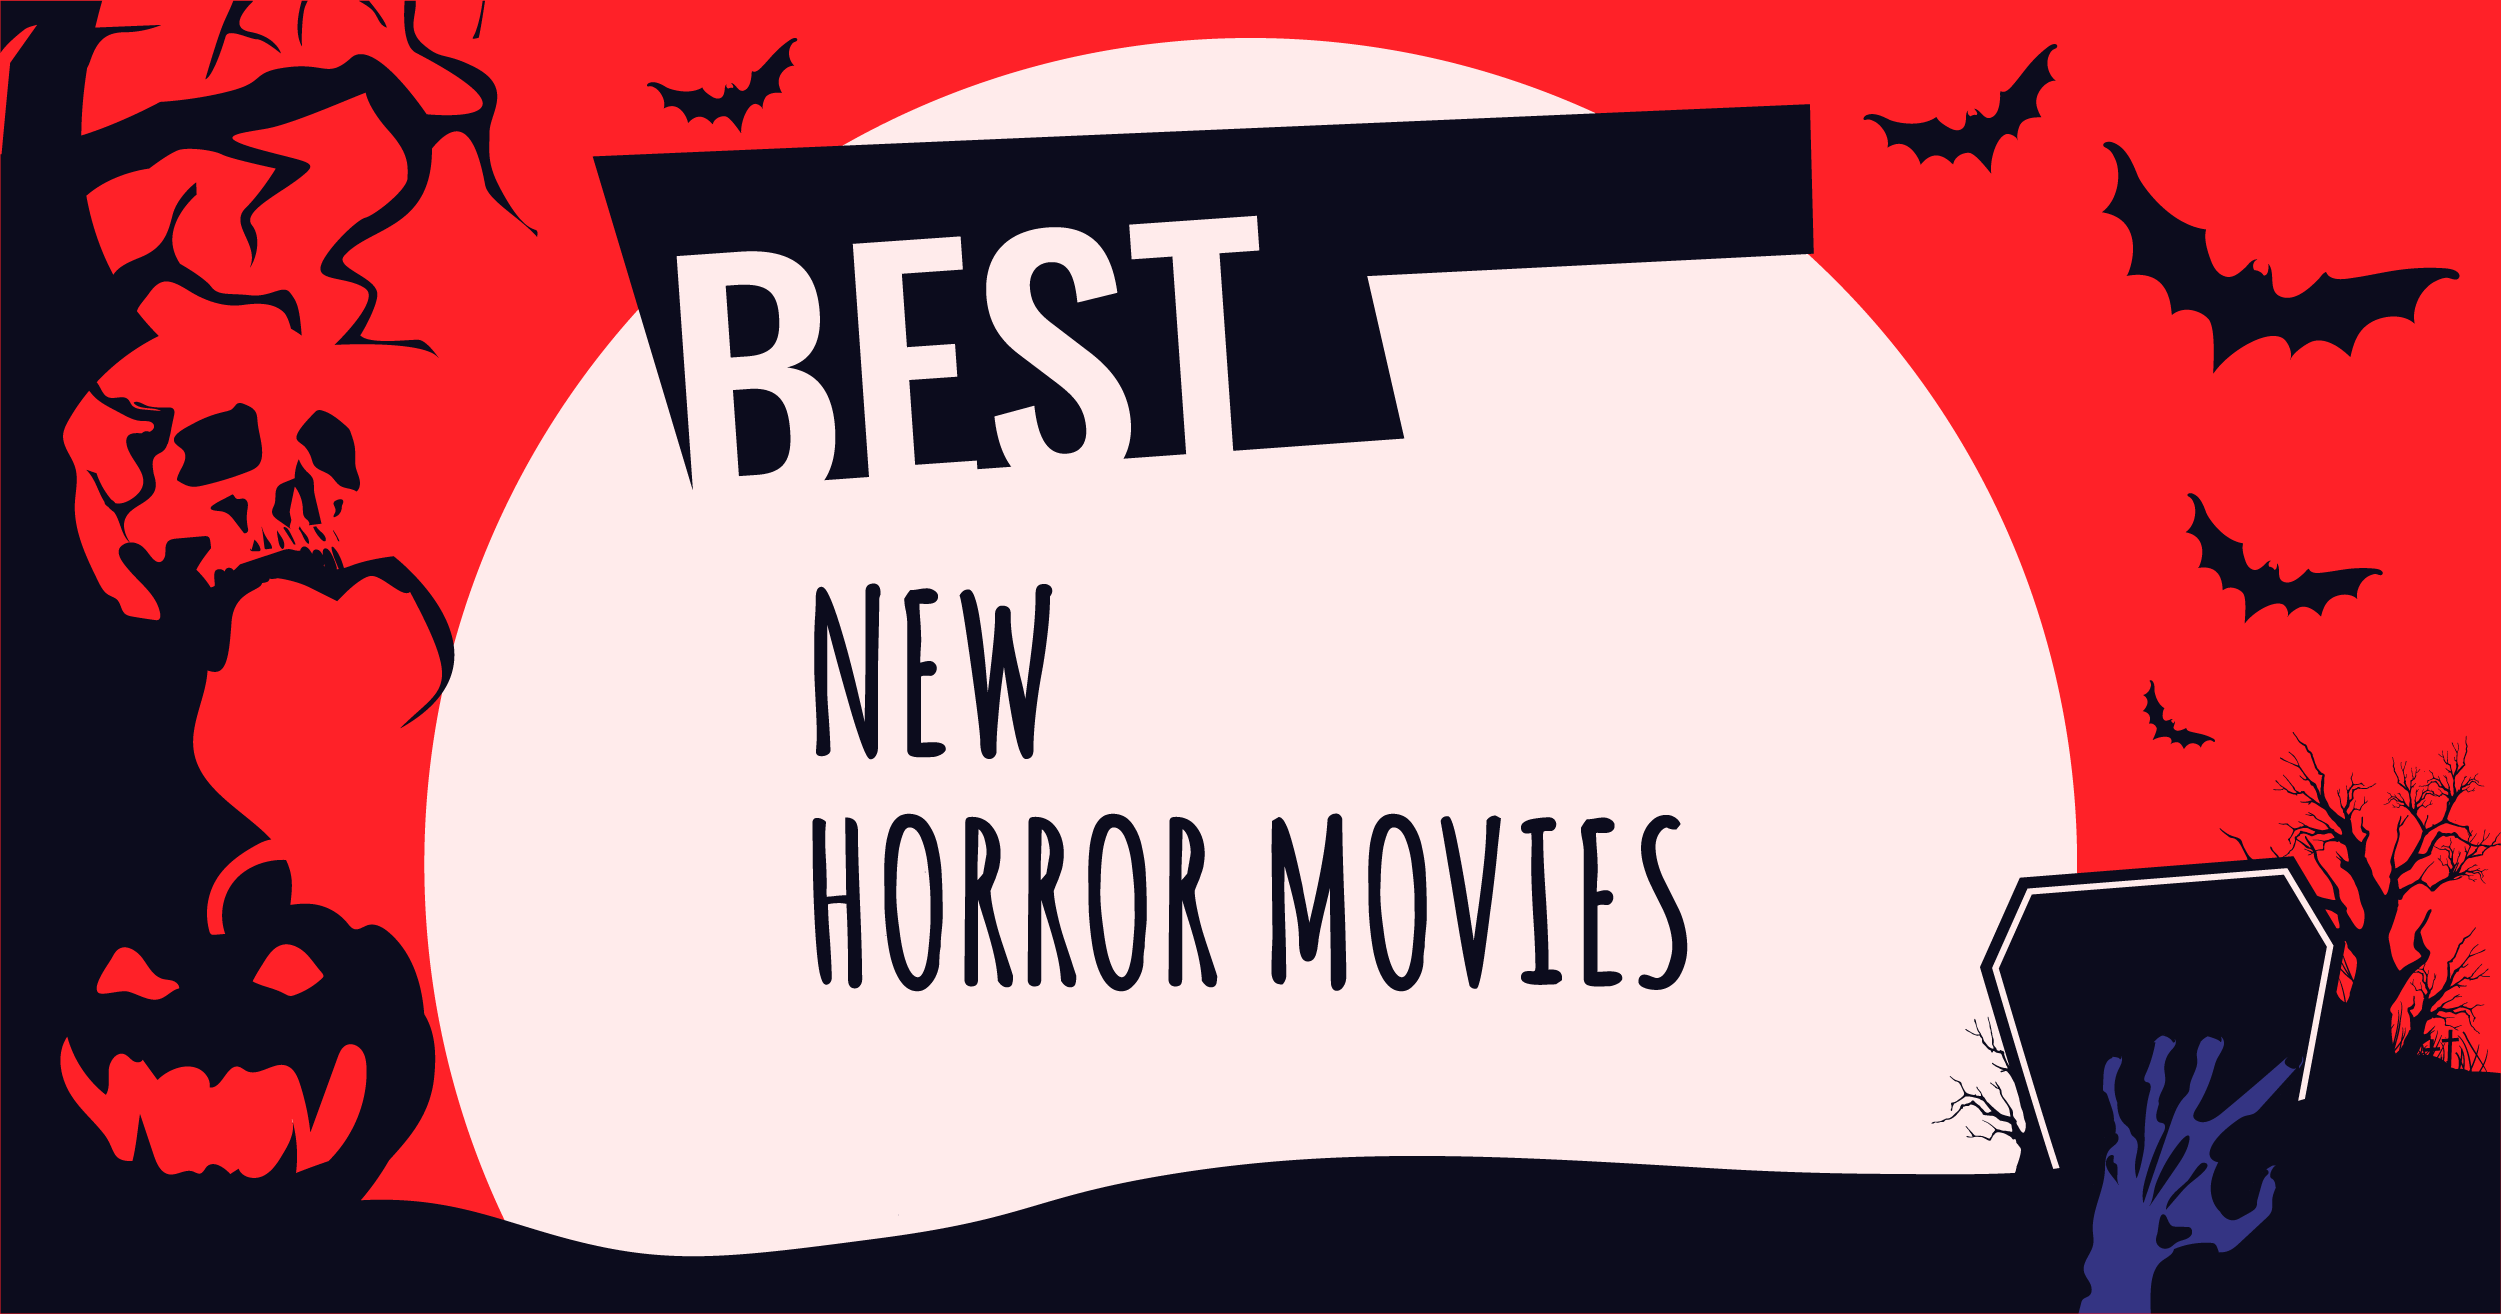 Best New Horror Movies